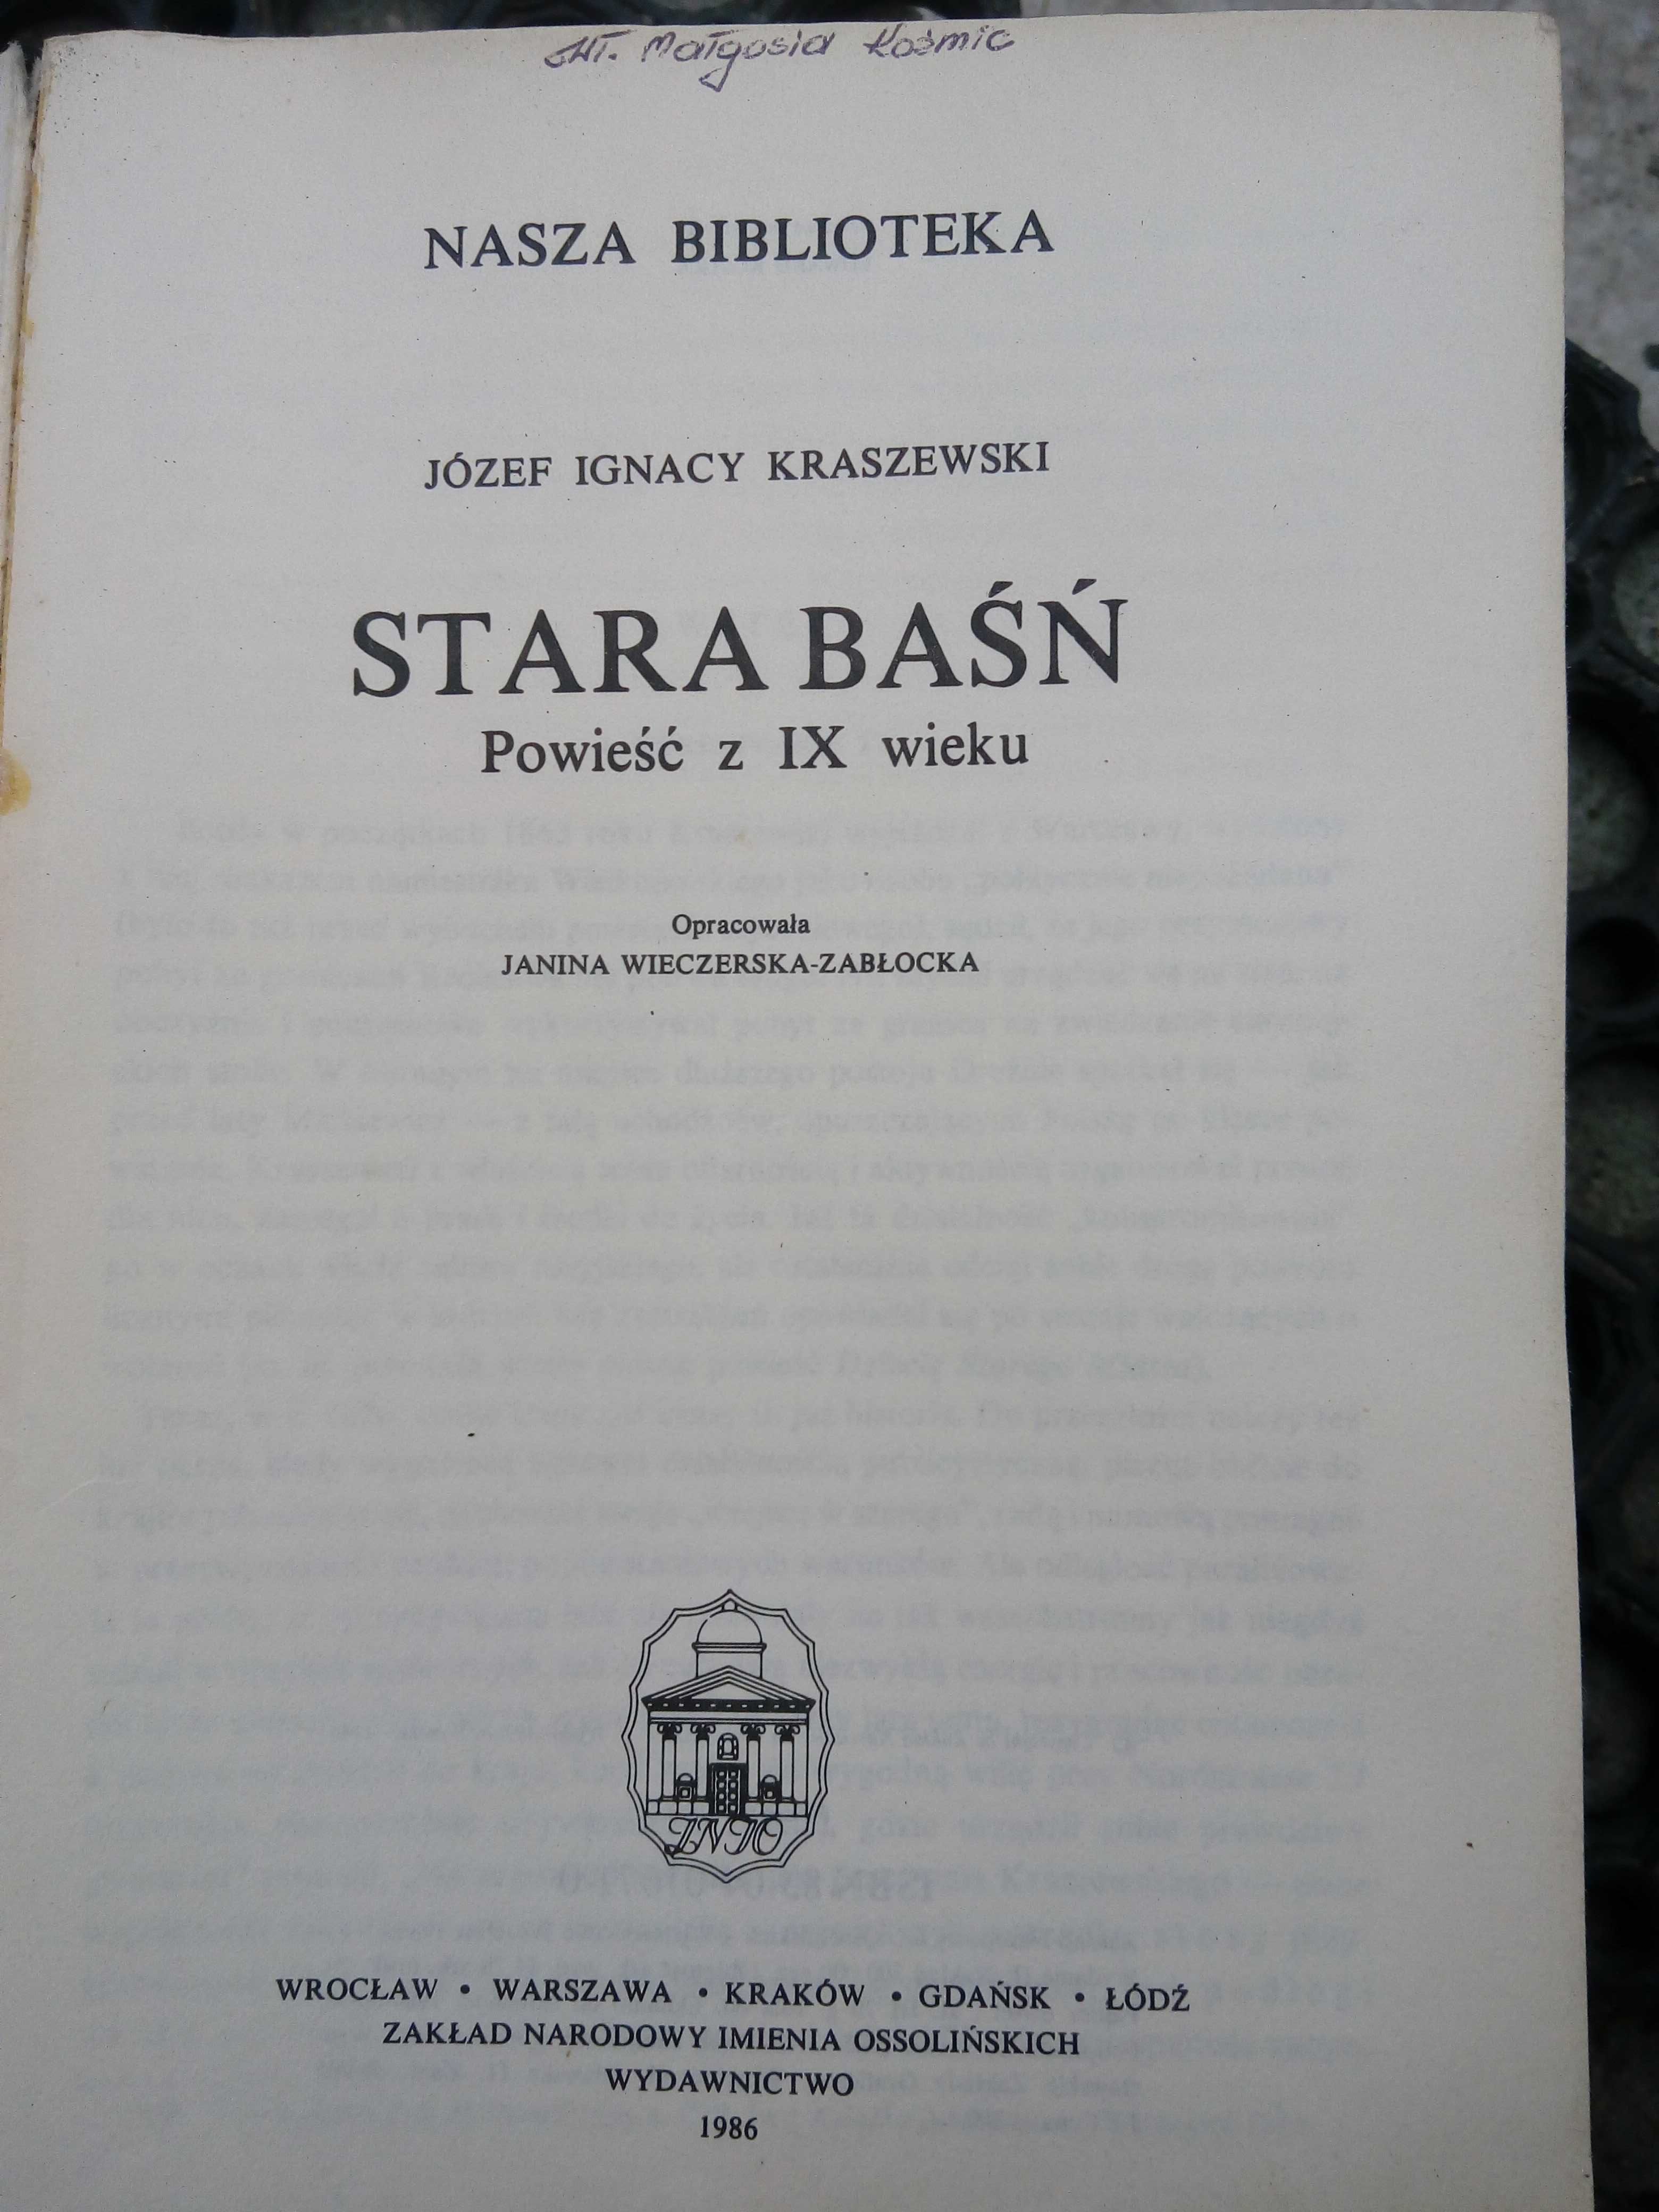 Stara Baśń - stare książki